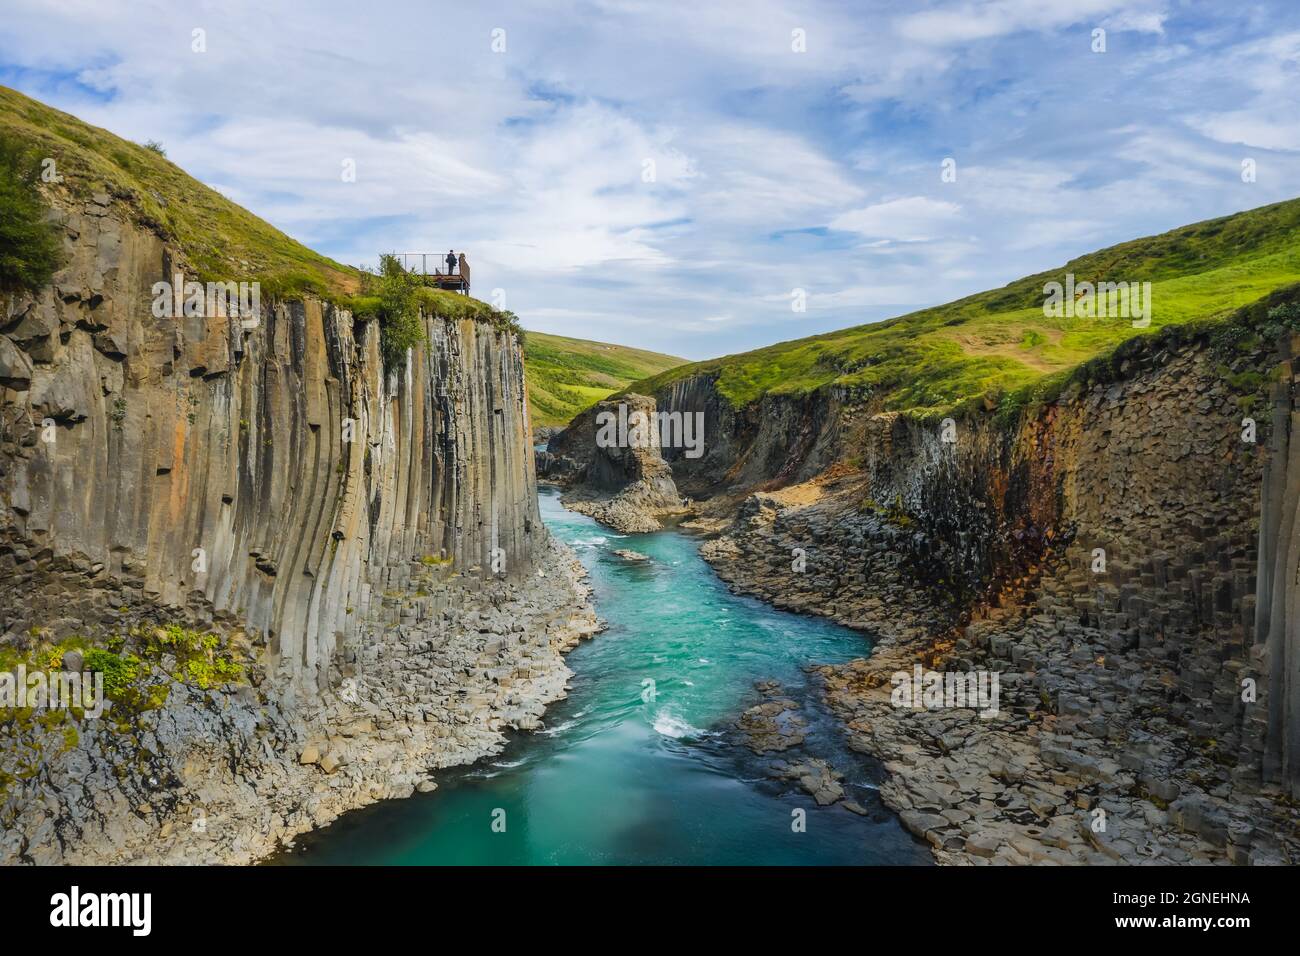 Impressive Studlagil canyon and Jokulsa river in Jokuldalur Iceland Stock Photo